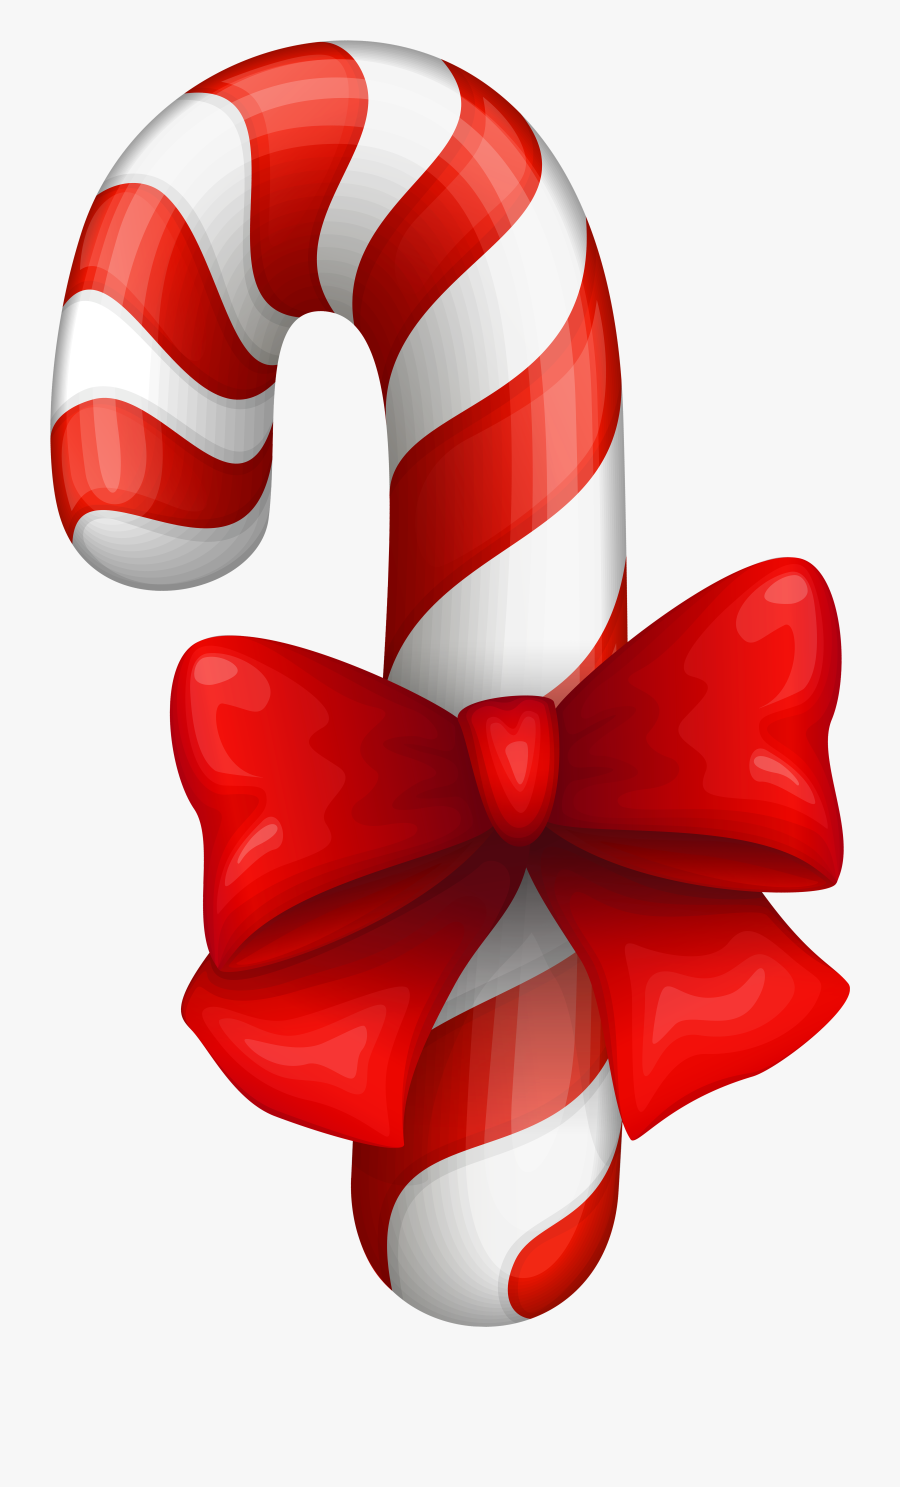 Candy Cane Png Clip Art Image - Christmas Clip Art Candy Cane, Transparent Clipart